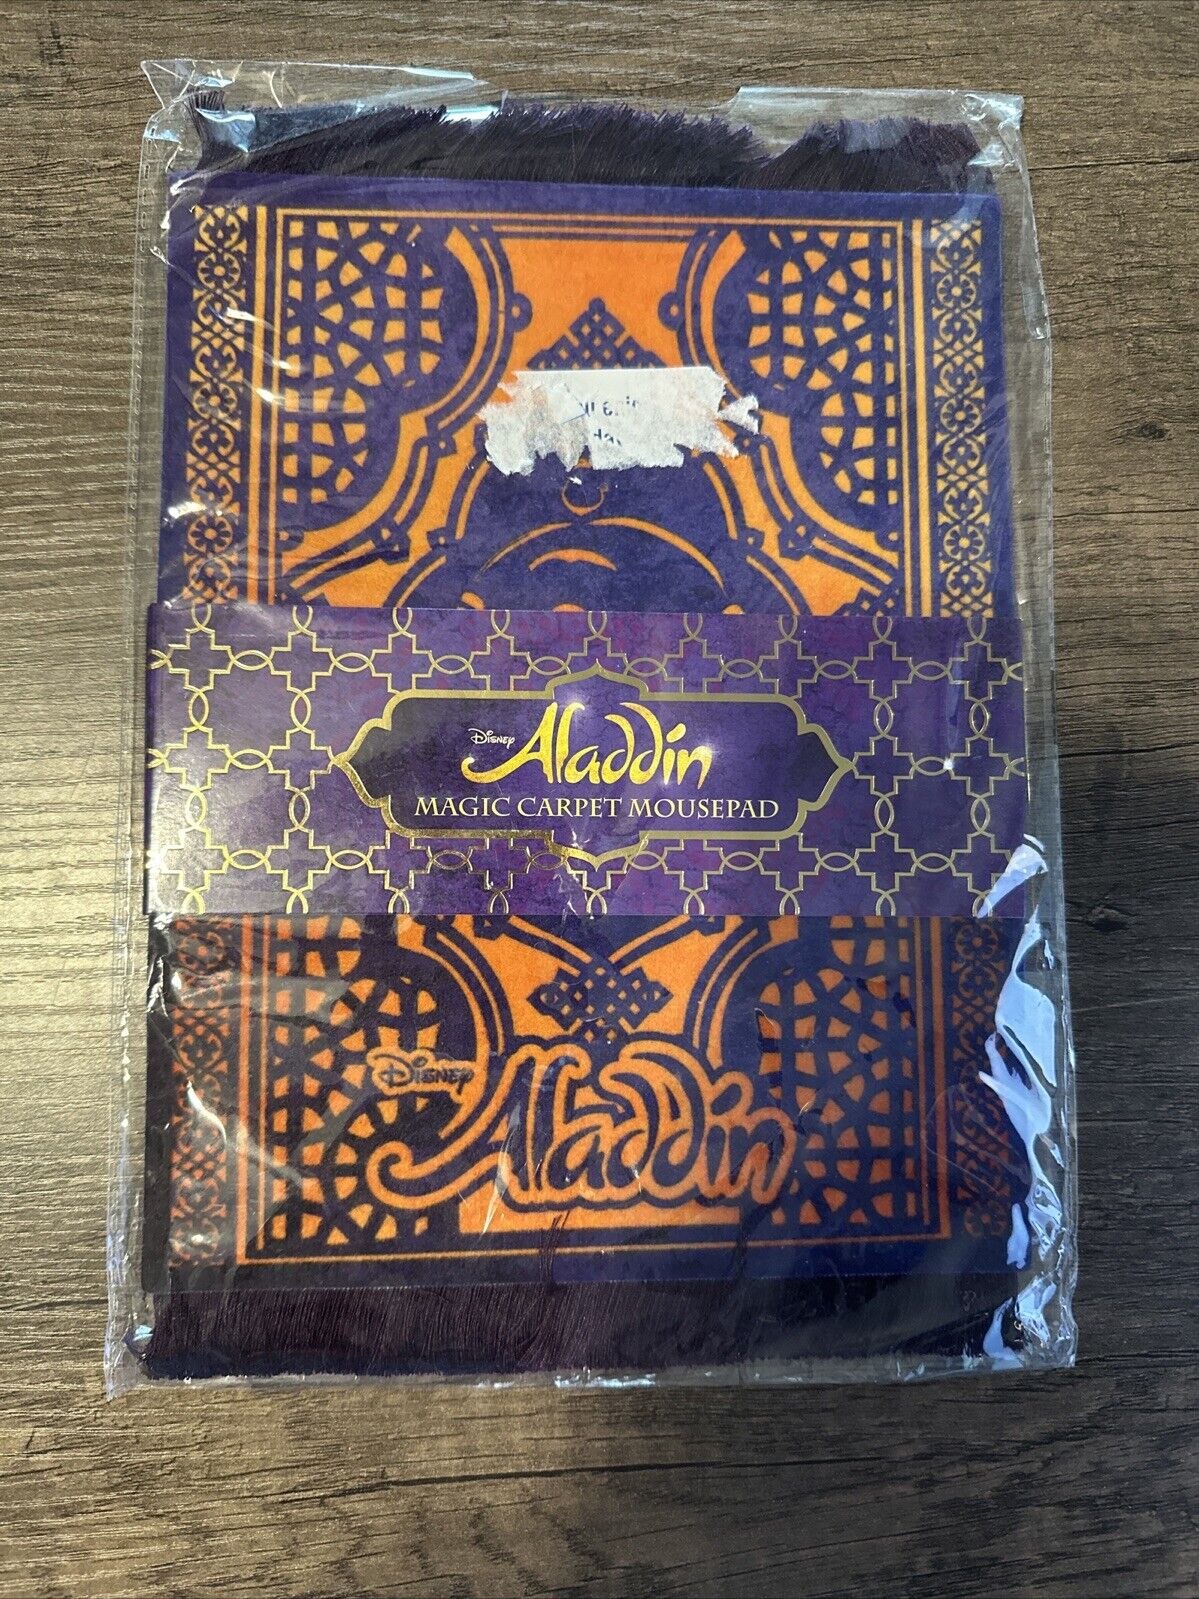 Rare Disney Aladdin Magic Carpet Mousepad Theater Promo New